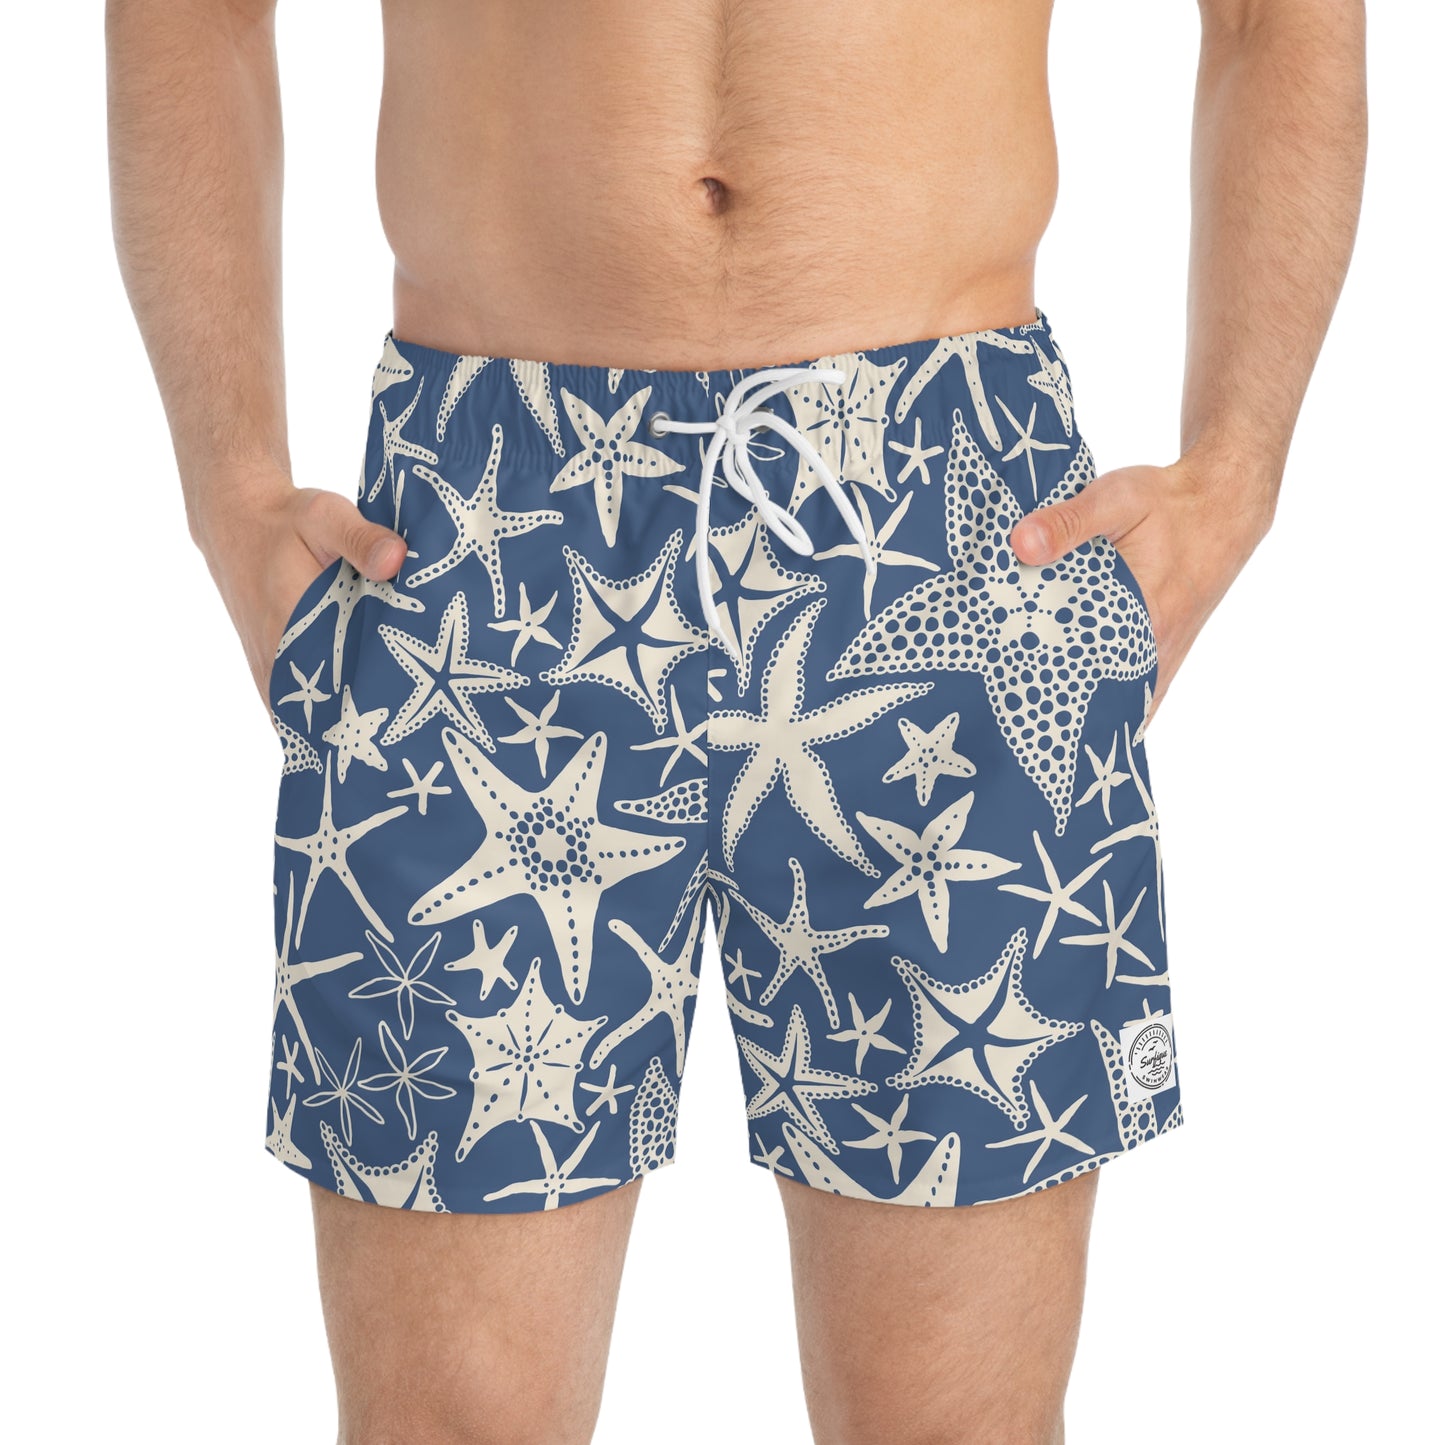 Blue Starfish Swimsuit